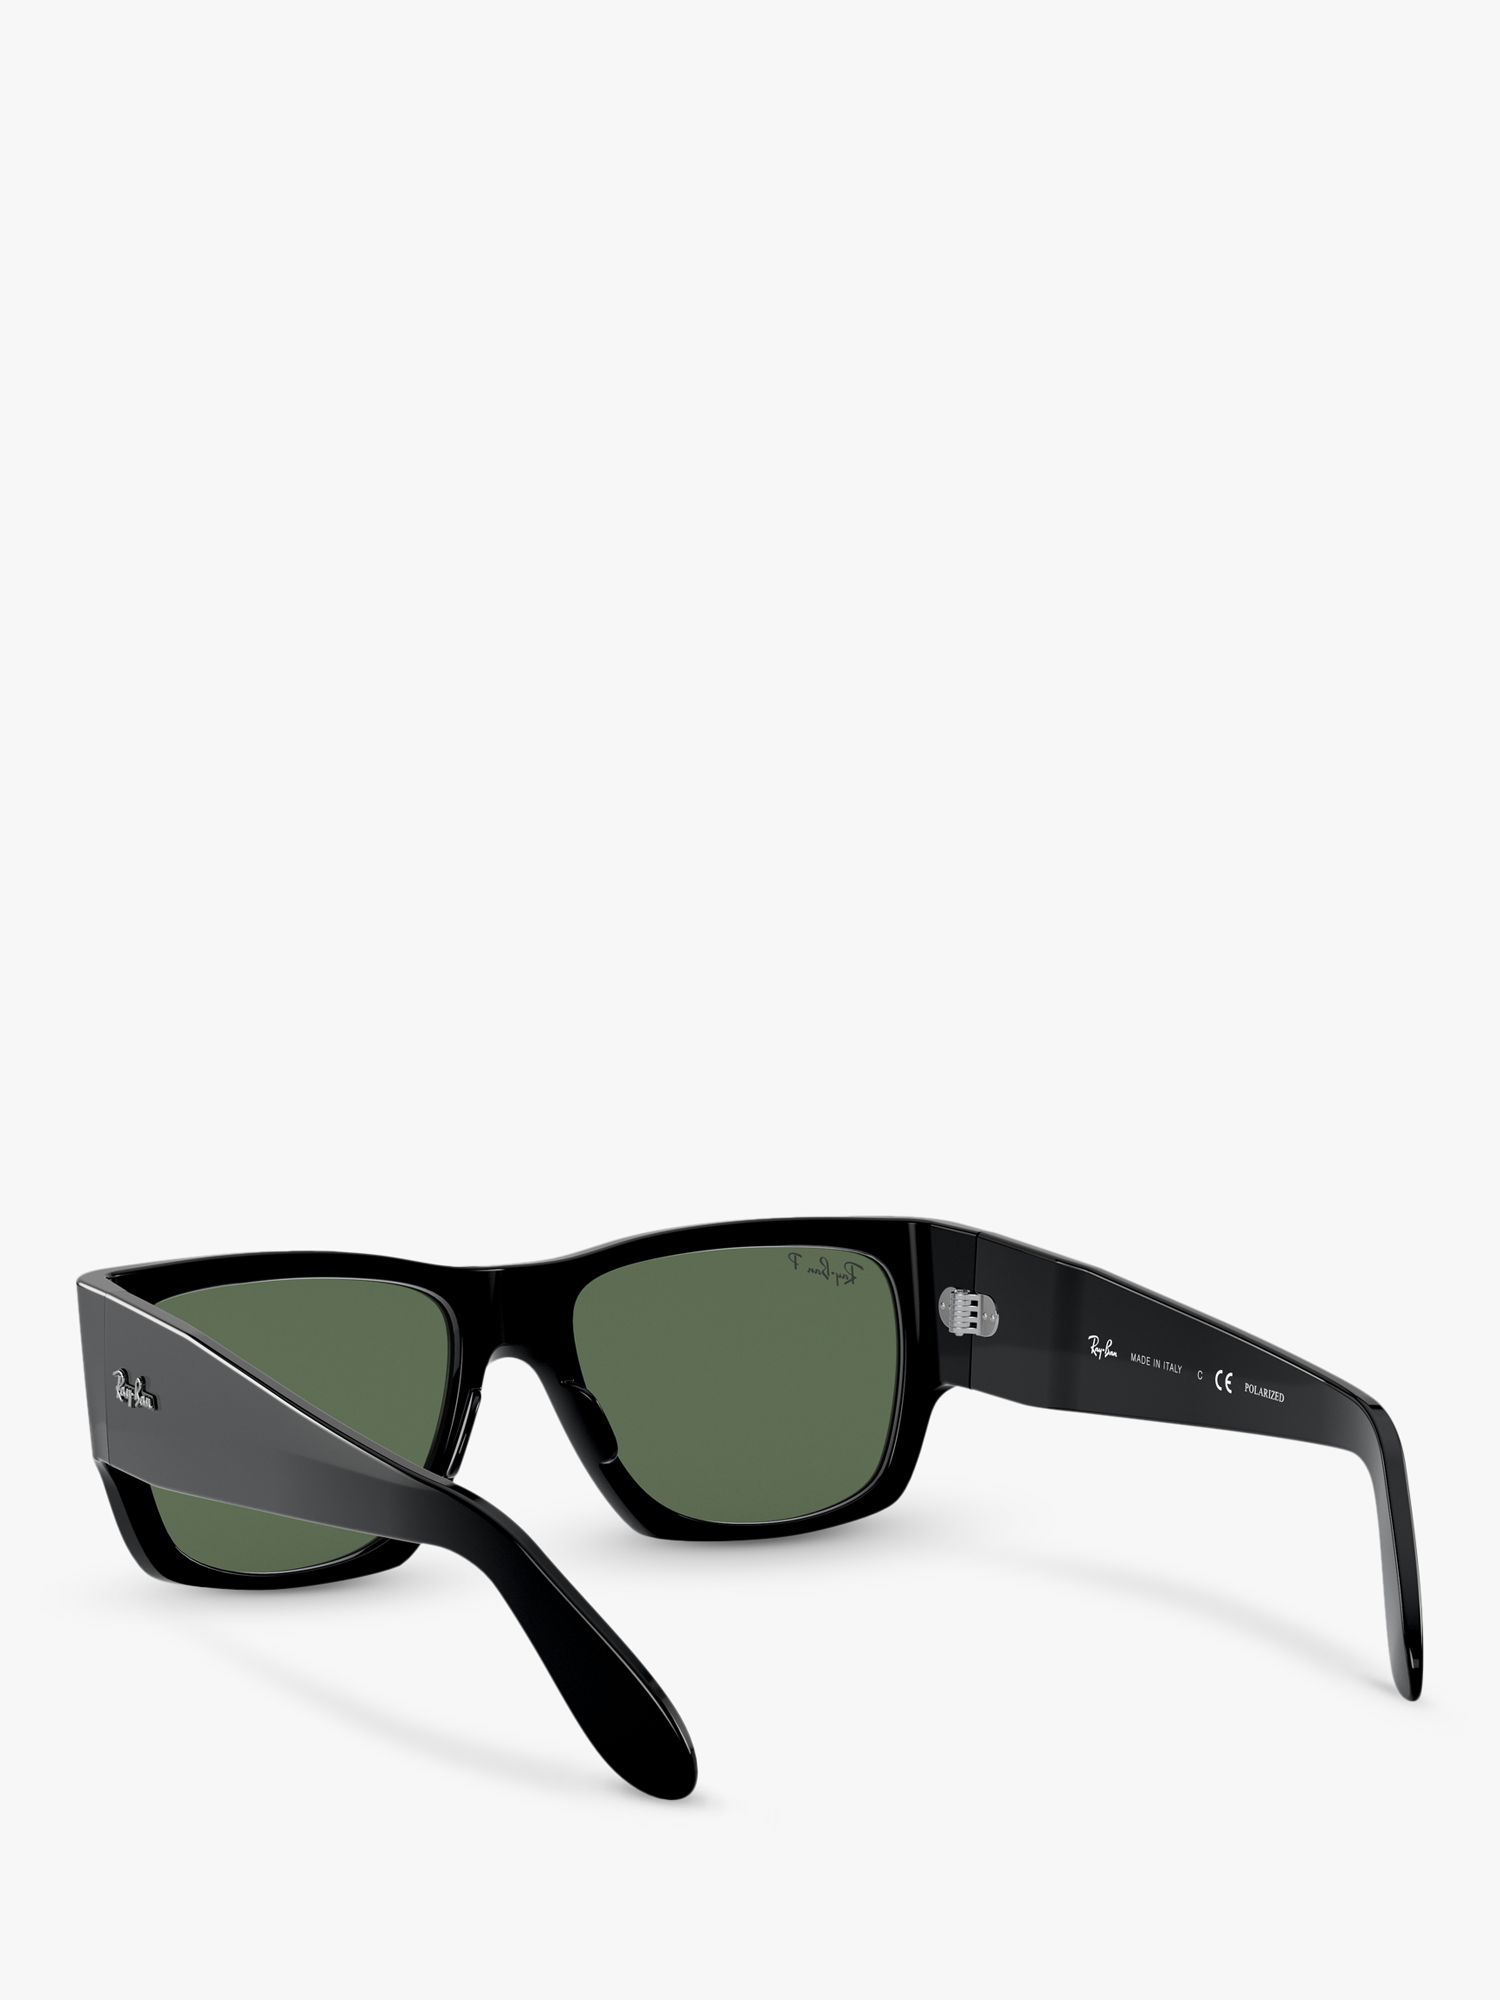 Buy Ray-Ban RB2187 Unisex Polarised Square Sunglasses, Black/Green Online at johnlewis.com